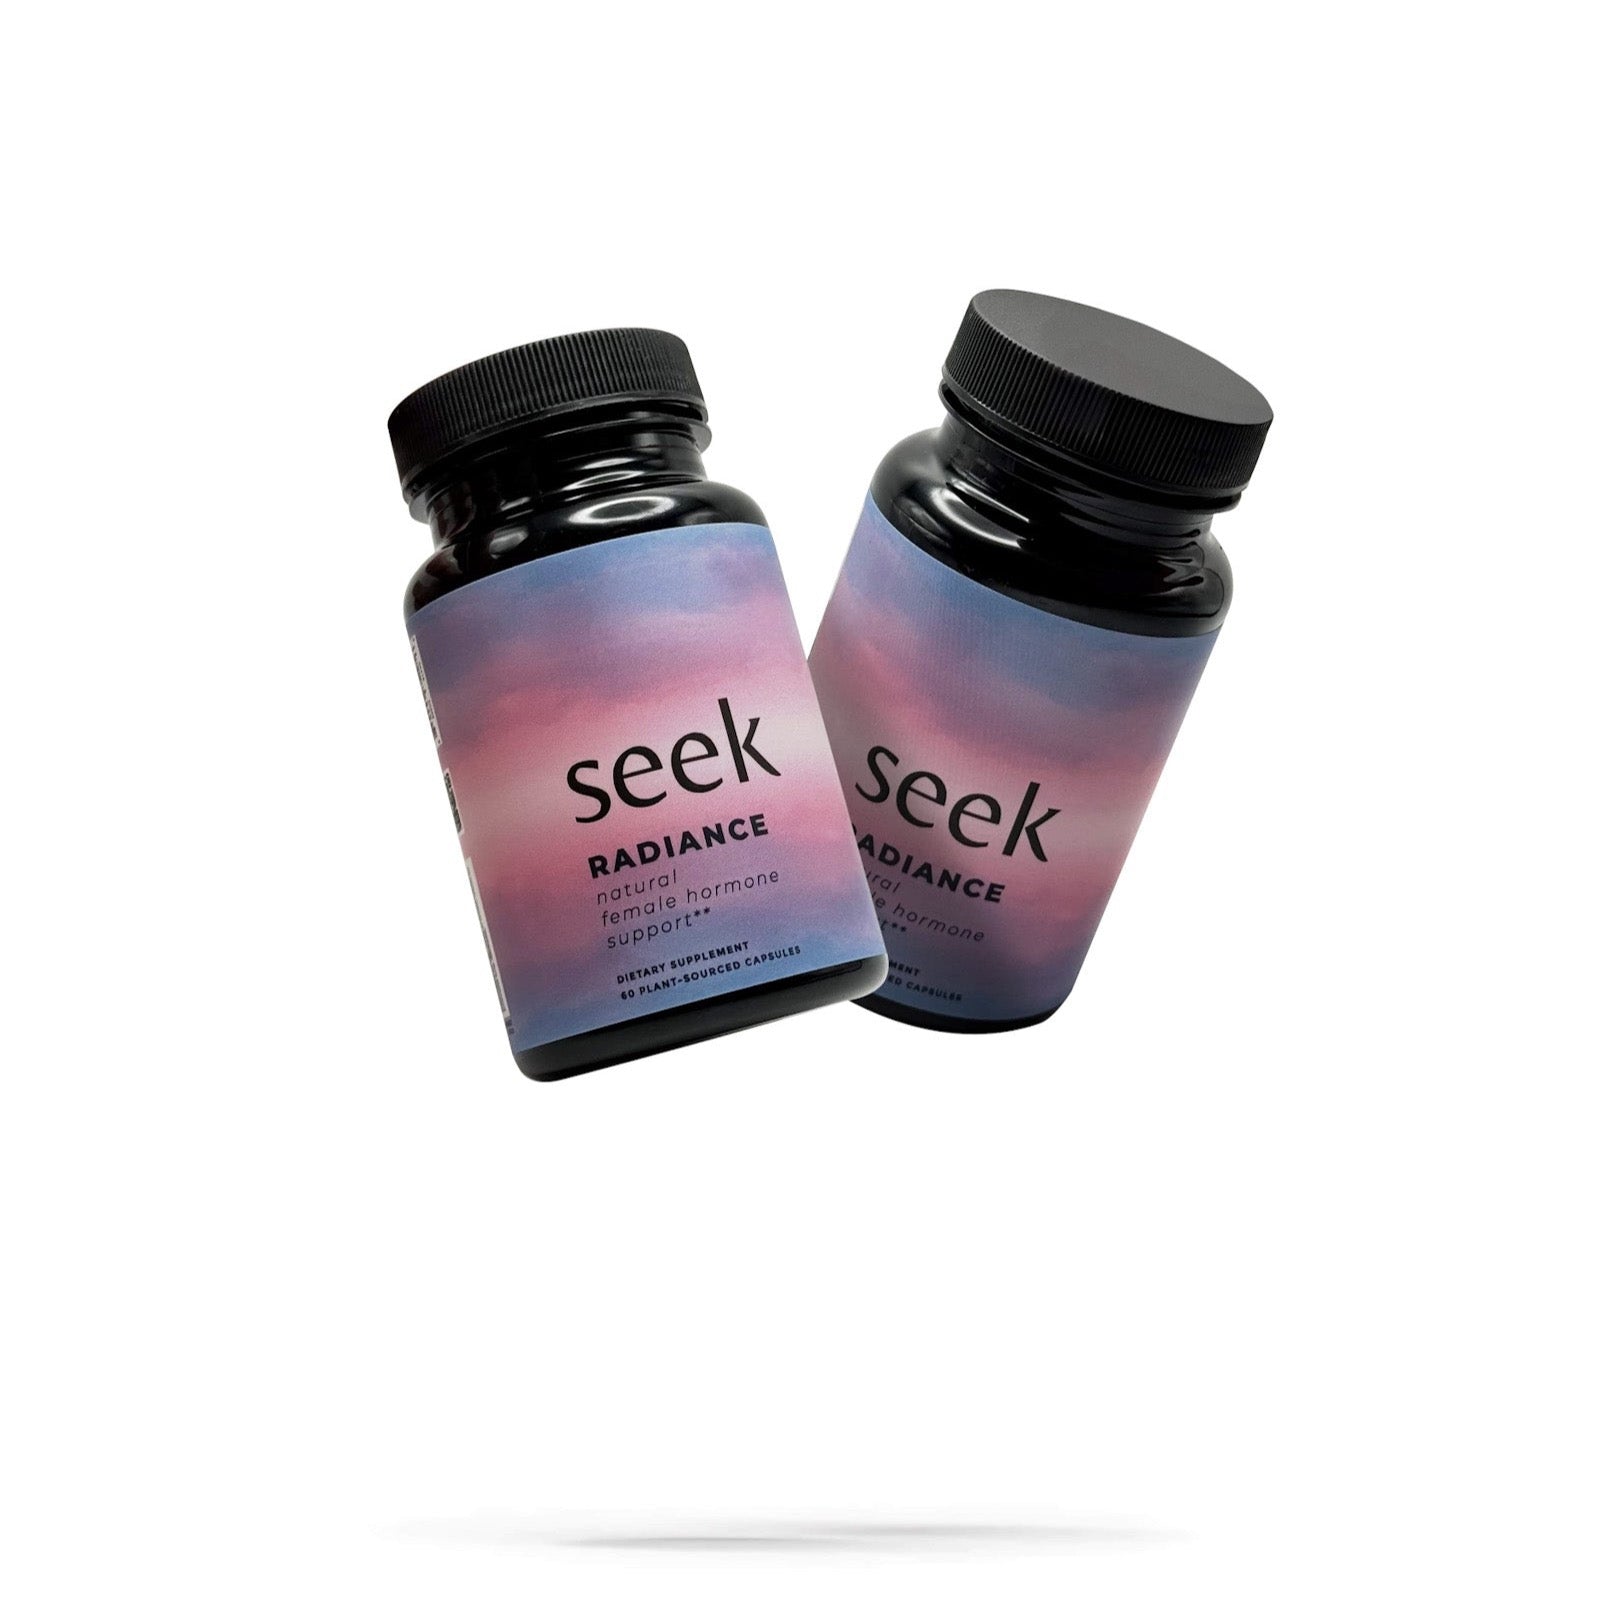 Two bottles of Seek® Radiance women's hormone balance supplement.